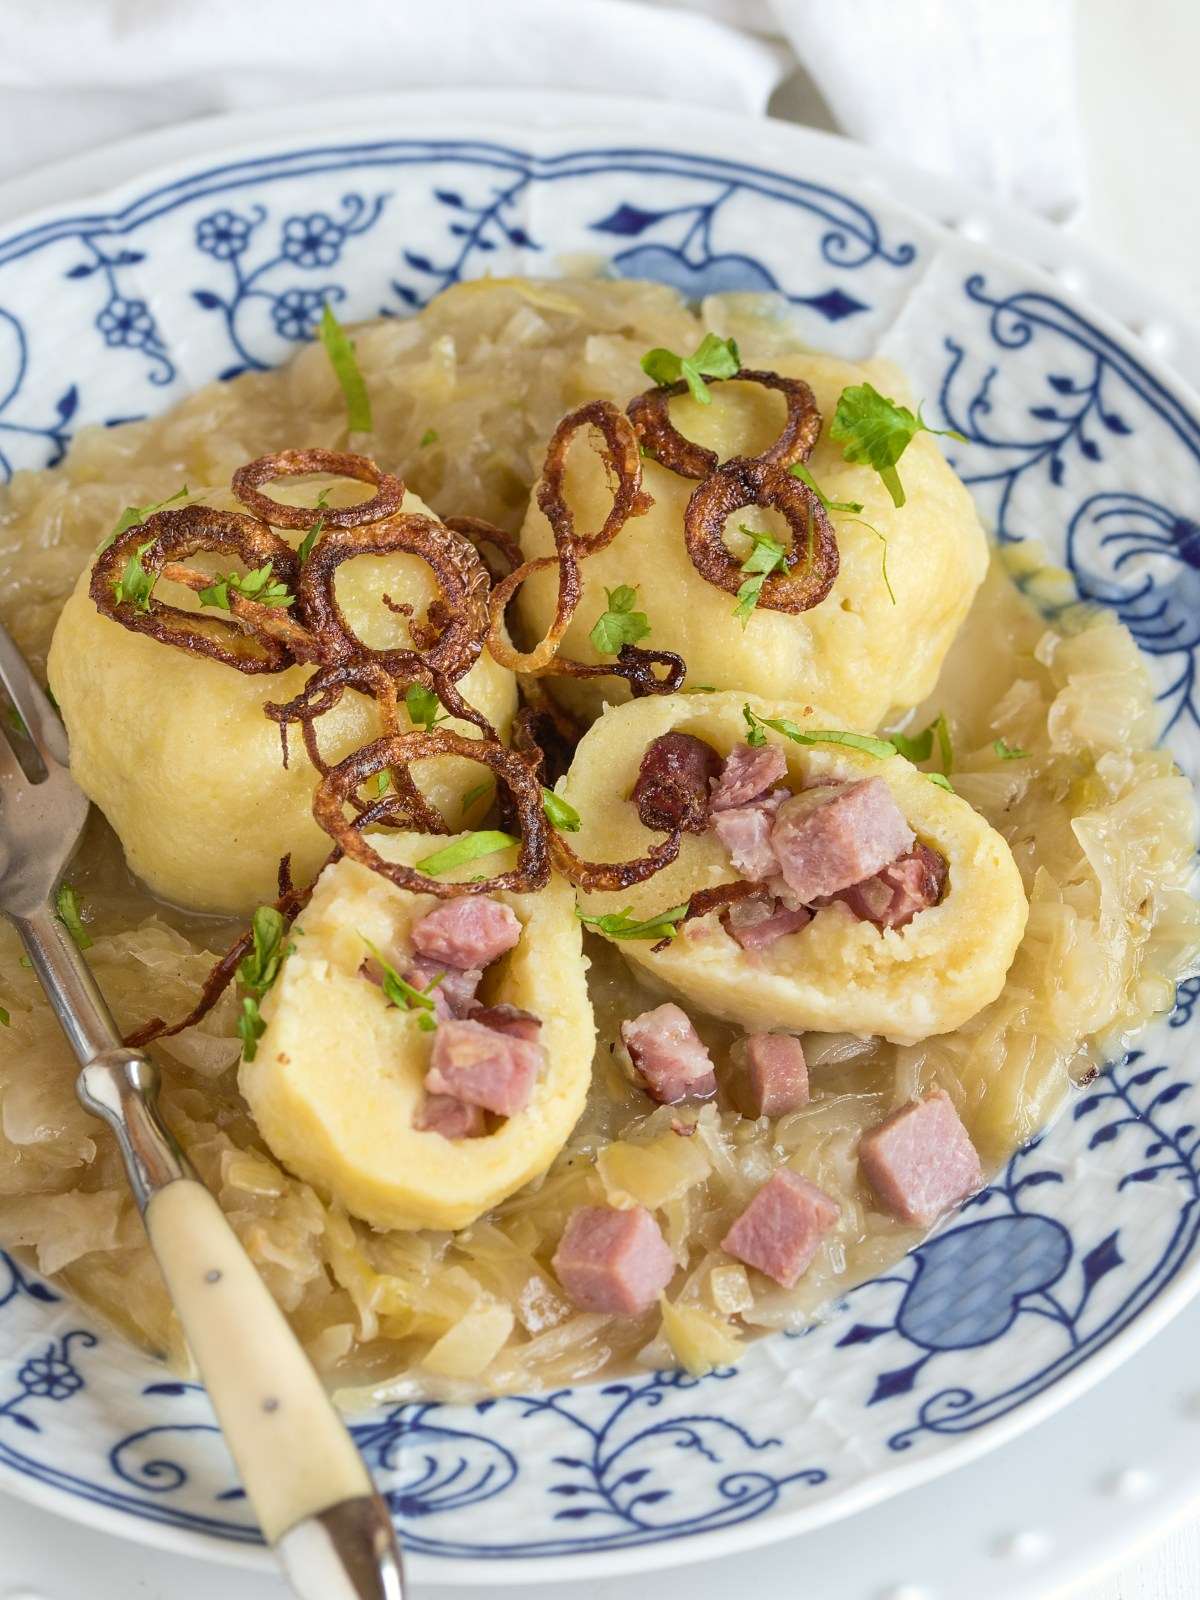 Czech stuffed potato dumplings with smoked meat, served with sauerkraut.